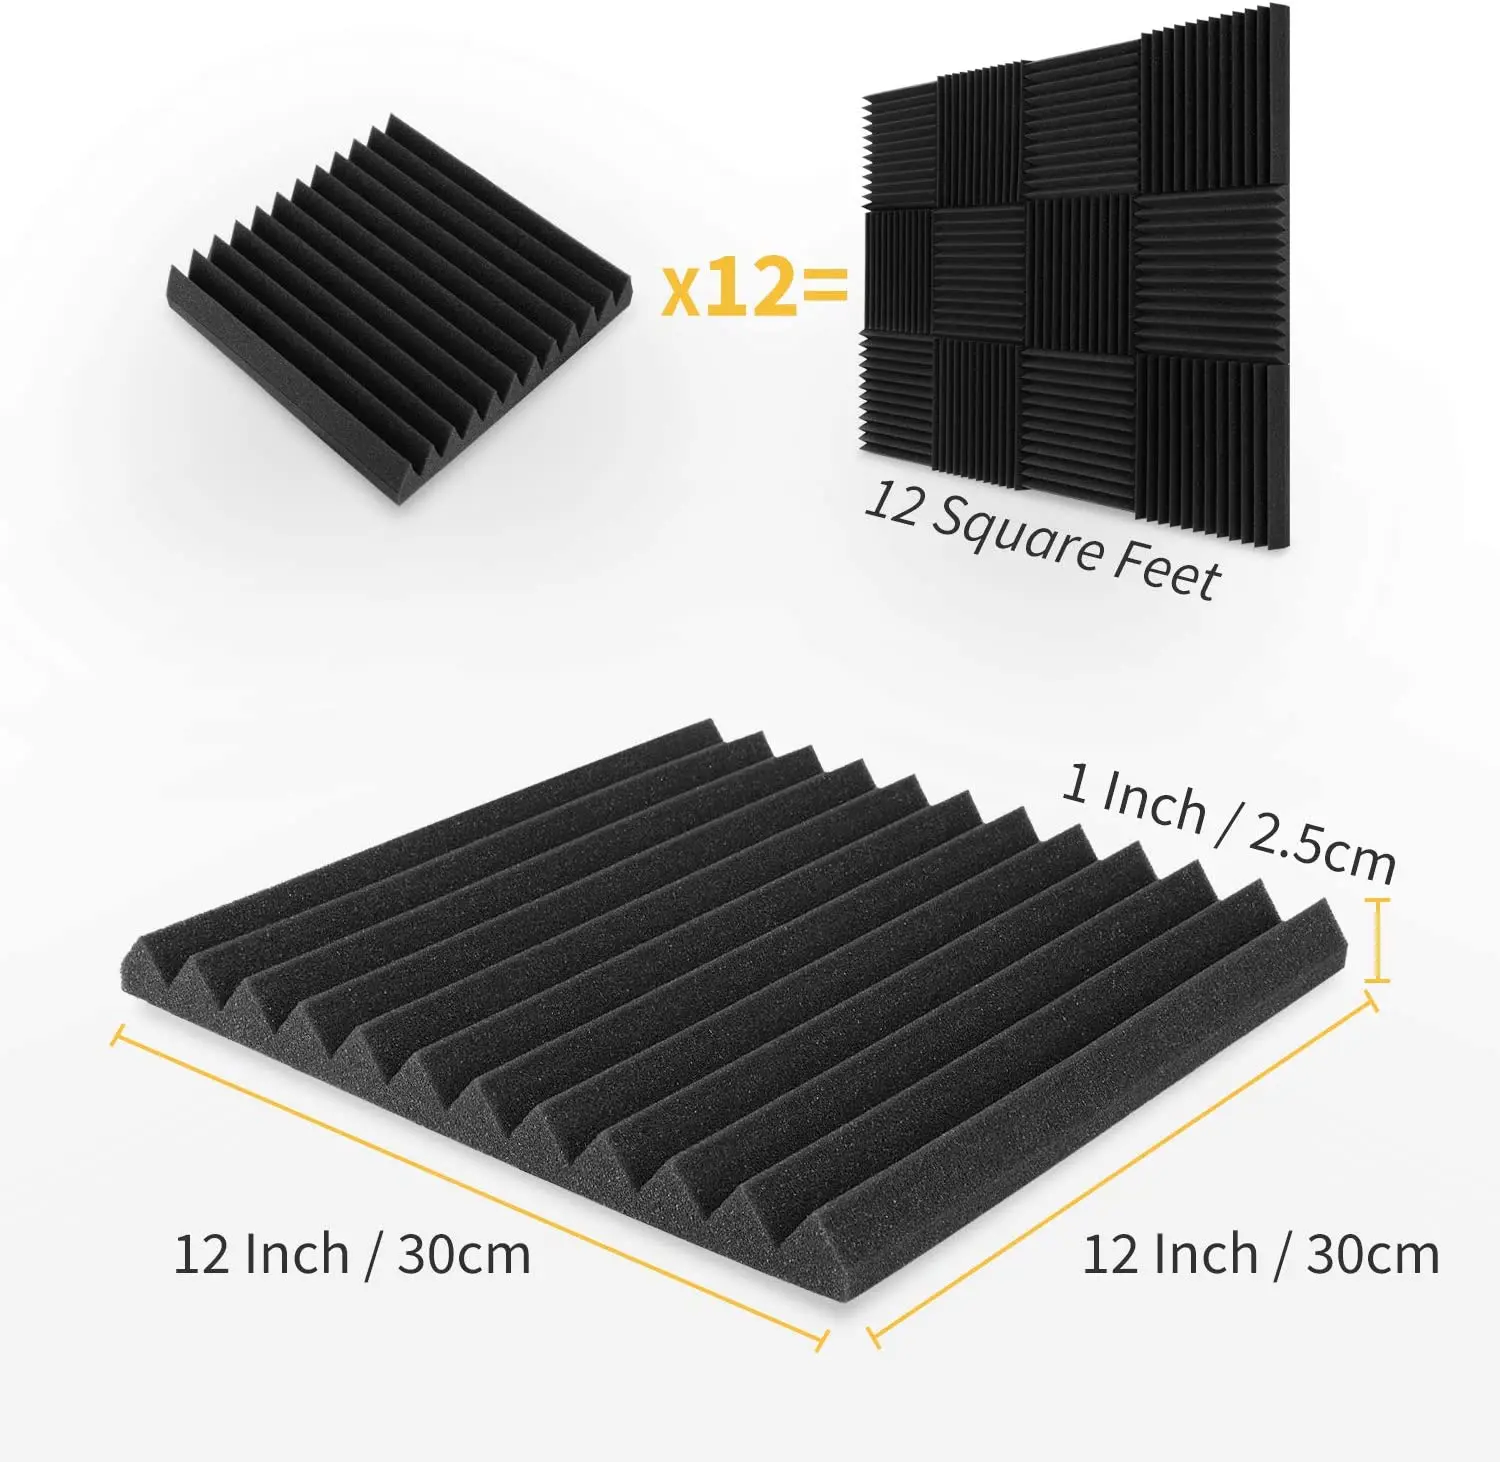 48PCS 300x300x25mm Acoustic Foam Sound Insulation Panels for KTV Bar Soundproofing Studio Wedges Sound Proof Wall Panels Espuma enlarge